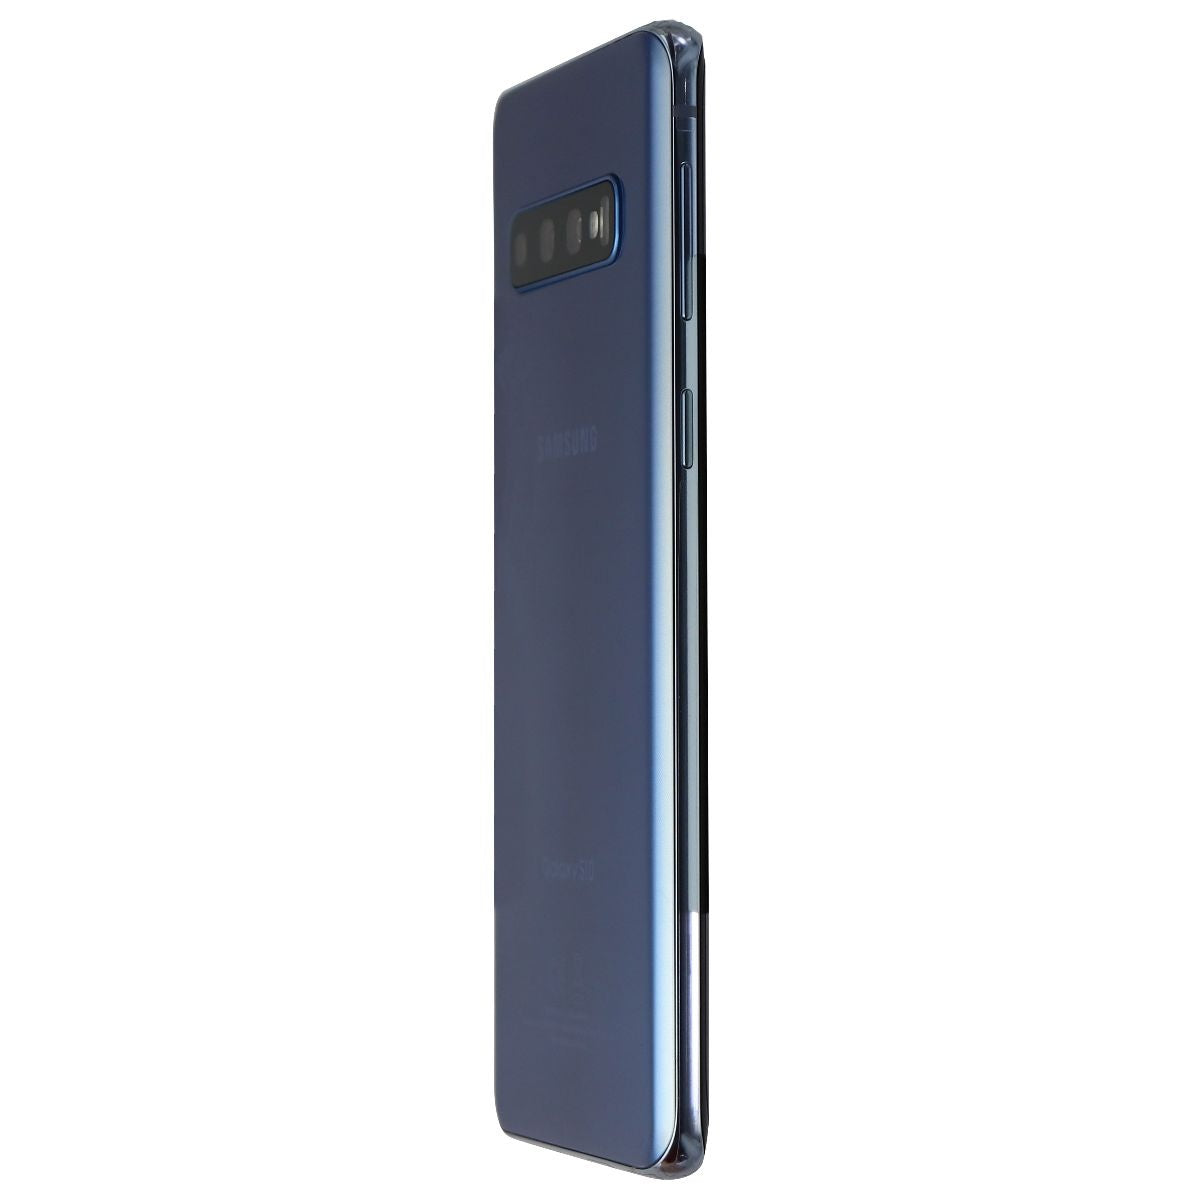 Samsung Galaxy S10 Smartphone (SM-G973U) Verizon ONLY - 512GB / Prism Blue Cell Phones & Smartphones Samsung    - Simple Cell Bulk Wholesale Pricing - USA Seller